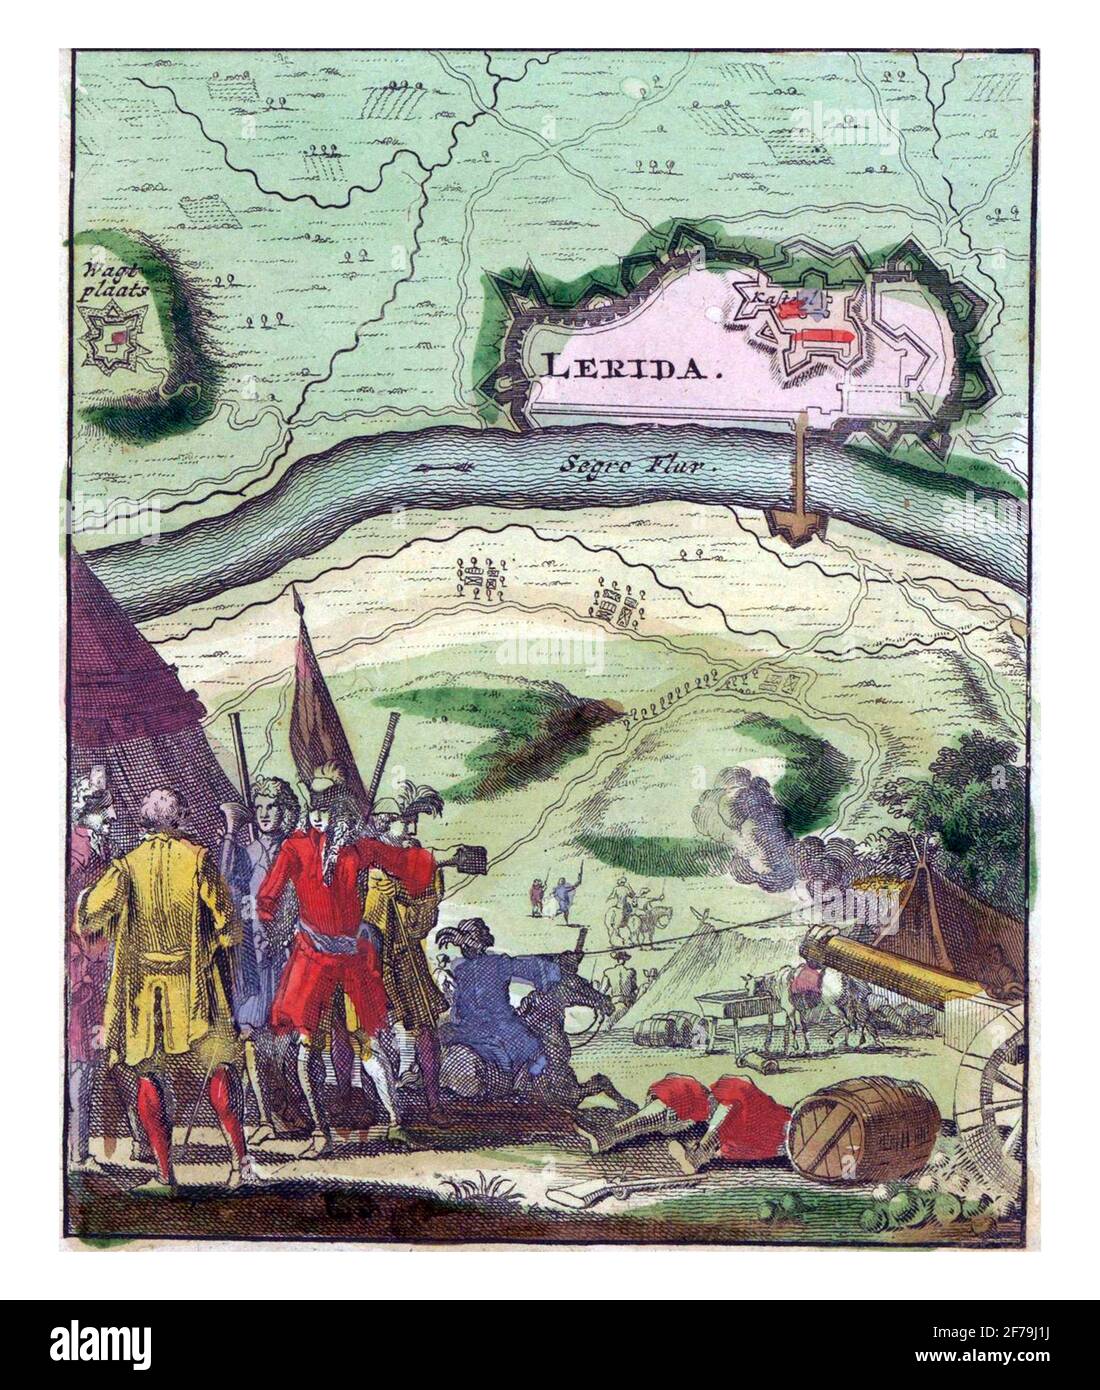 Map of Lerida, vintage engraving. Stock Photo